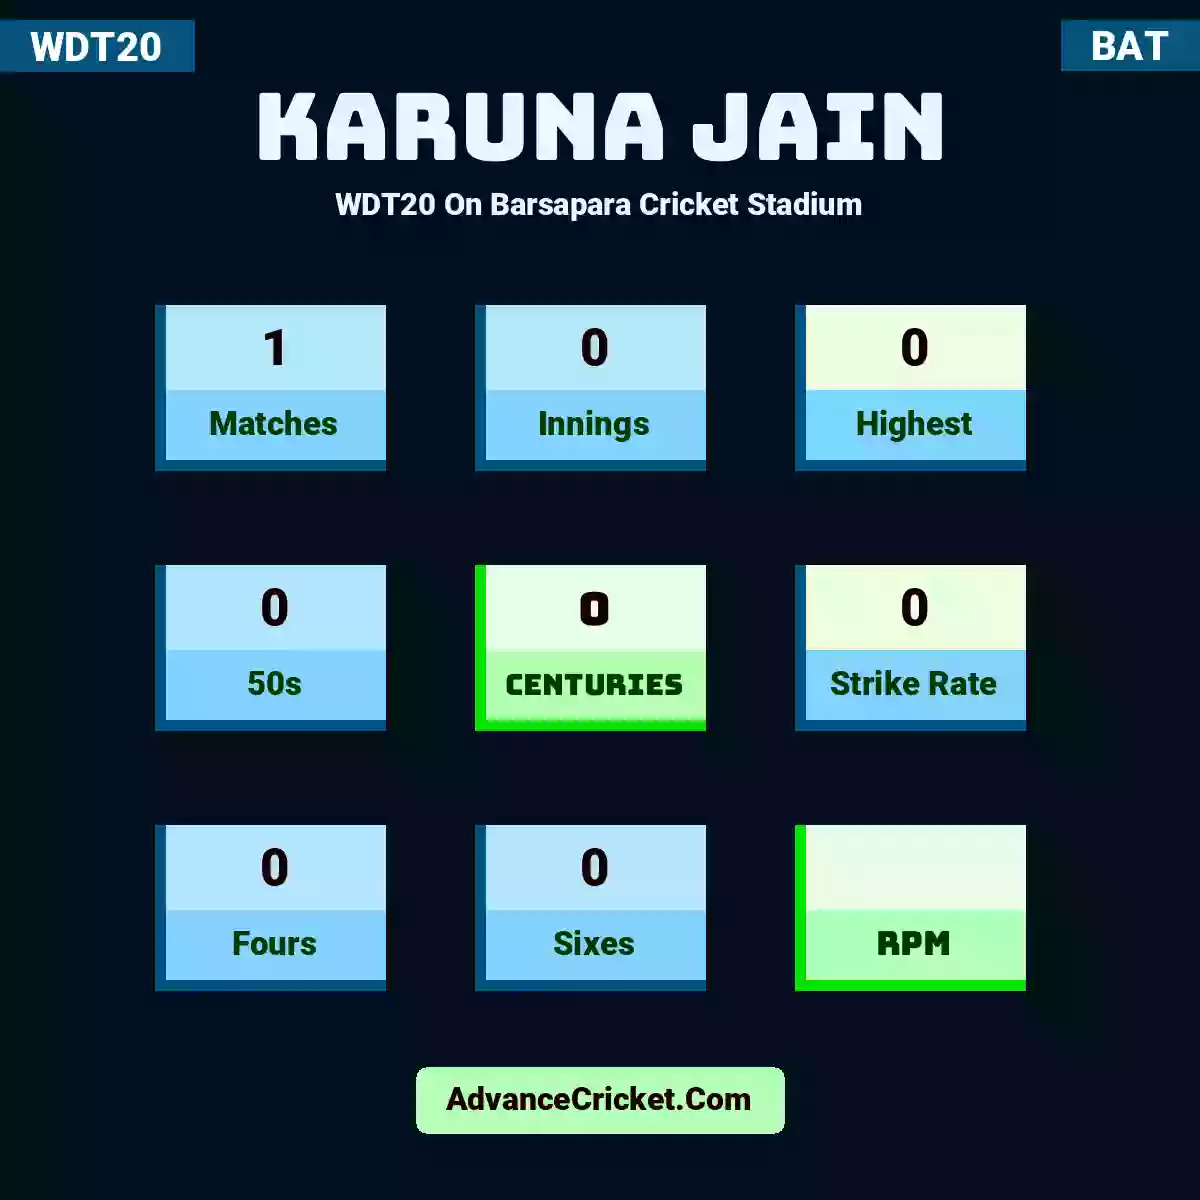 Karuna Jain WDT20  On Barsapara Cricket Stadium, Karuna Jain played 1 matches, scored 0 runs as highest, 0 half-centuries, and 0 centuries, with a strike rate of 0. K.Jain hit 0 fours and 0 sixes.